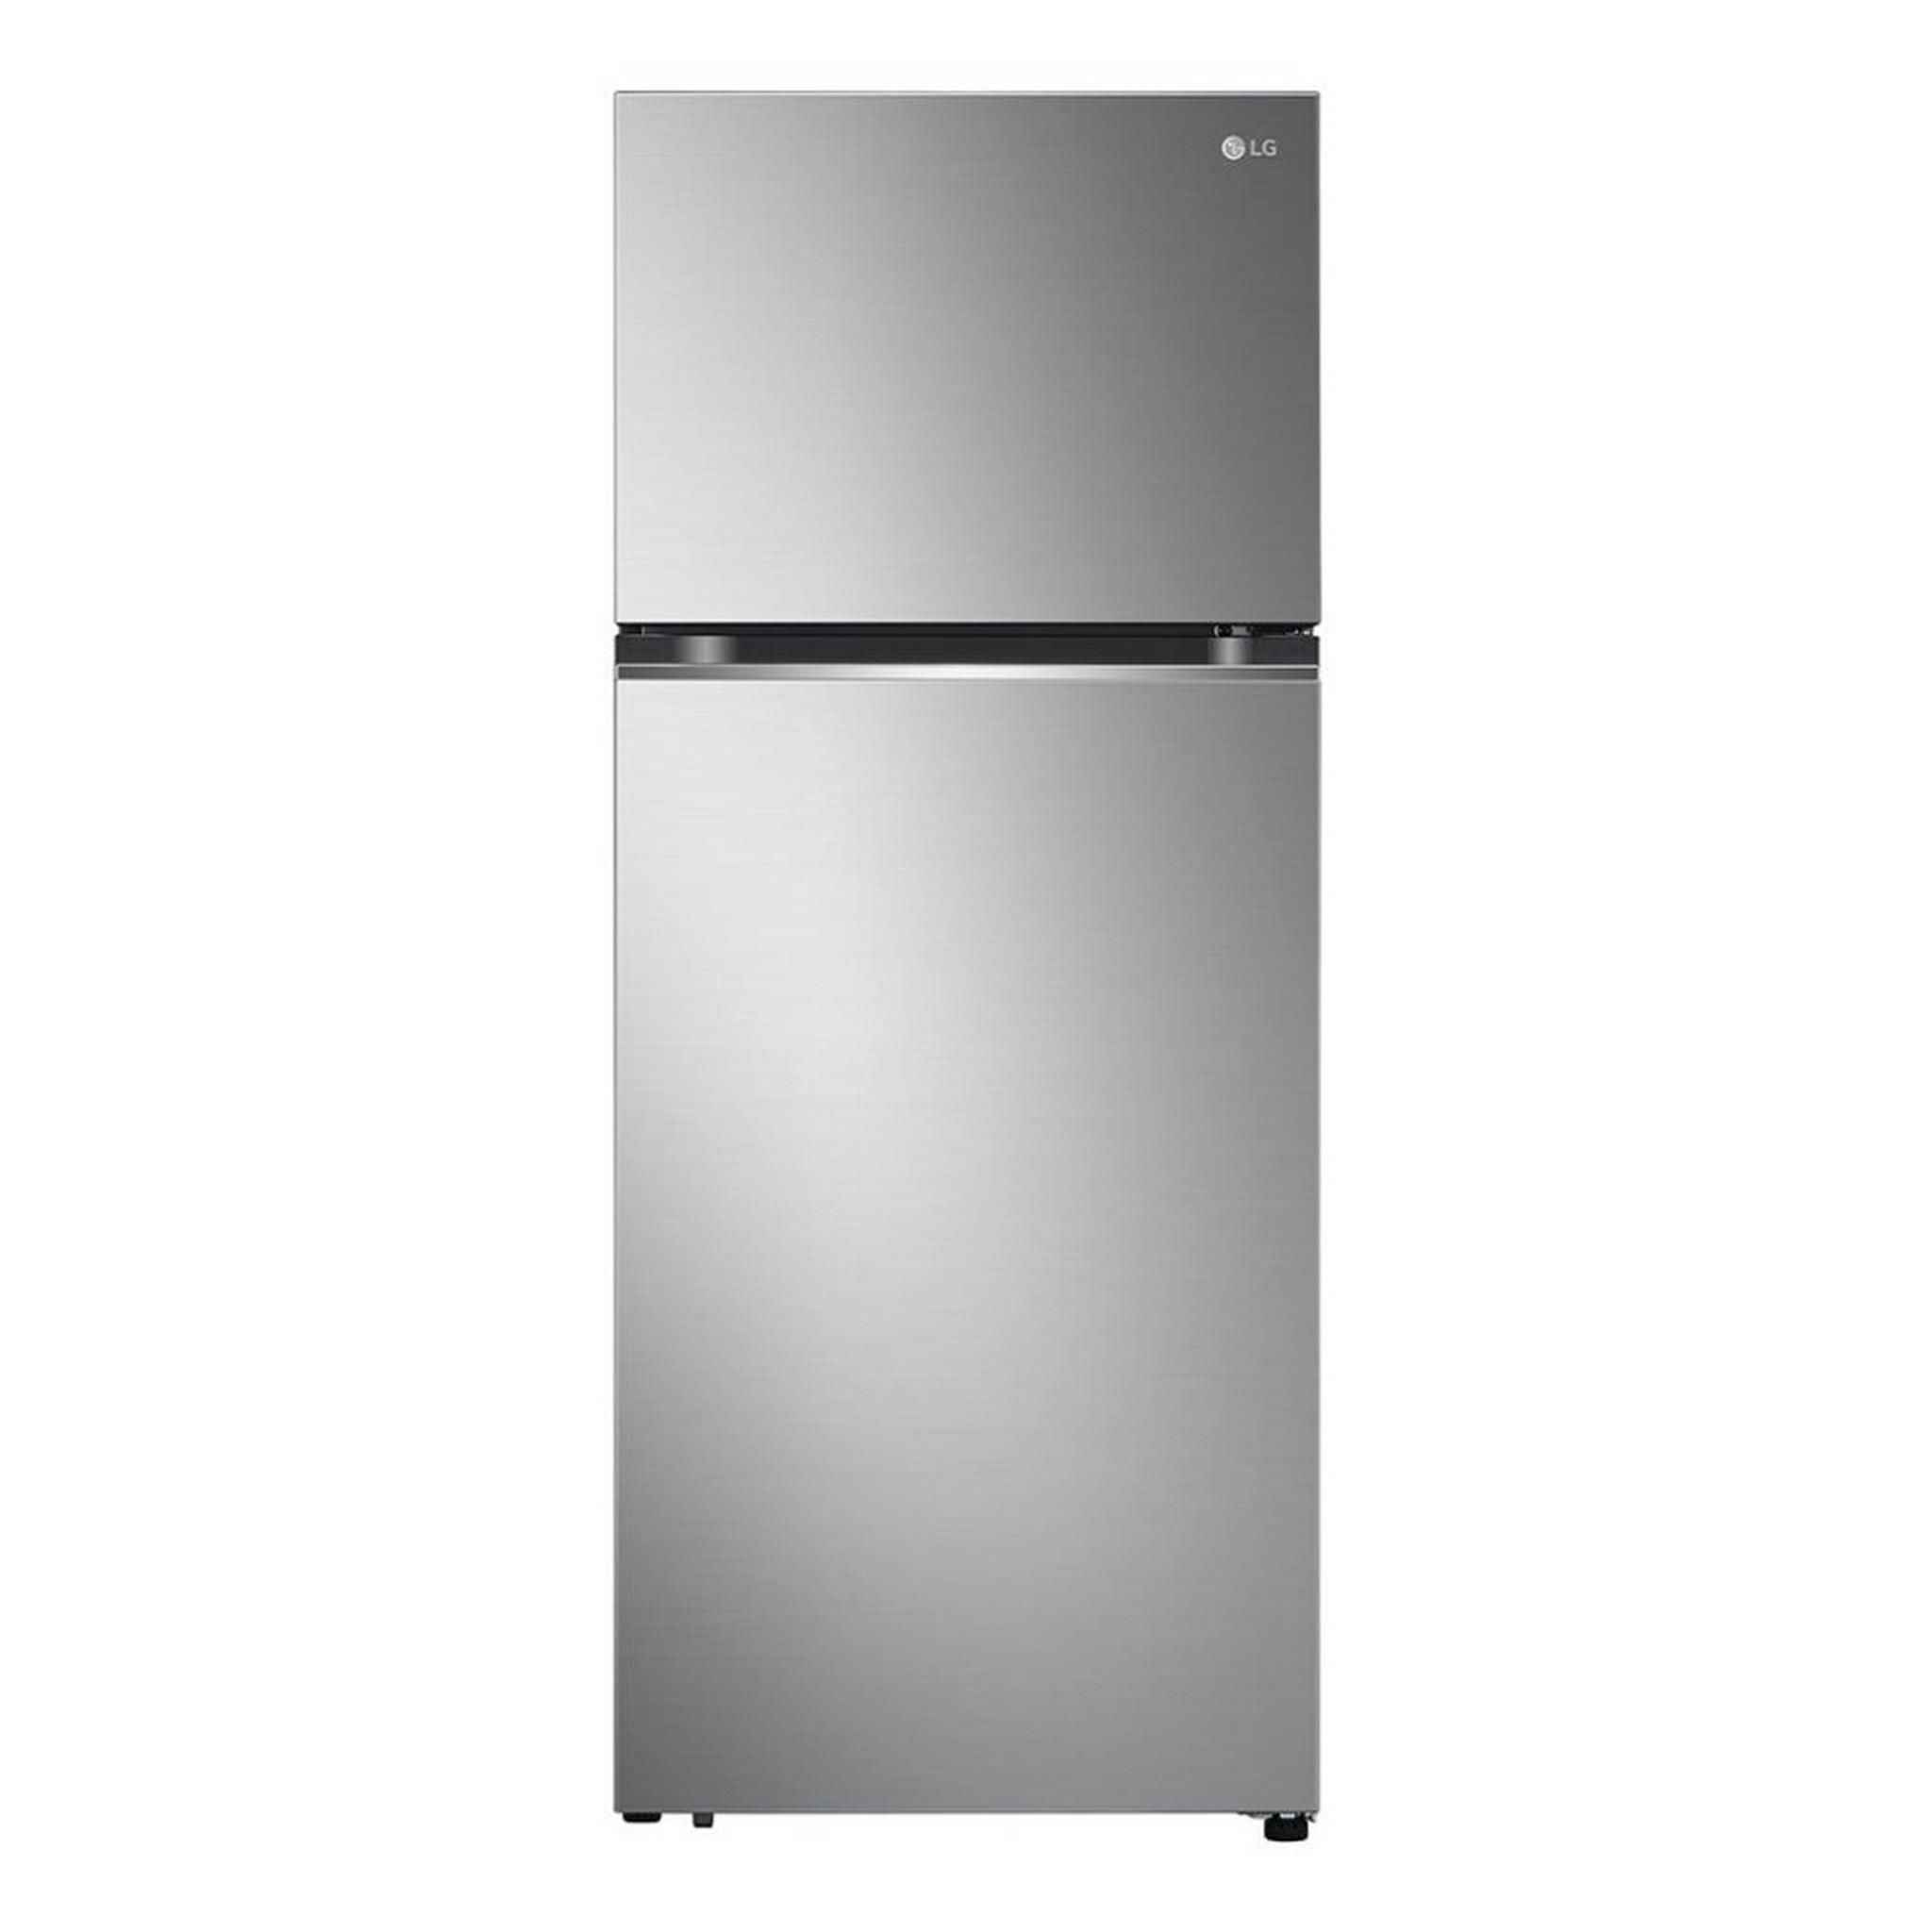 LG 14 CFt Inverter Compressor Top Freezer Refrigerator - Silver (LT15CBBSIV)